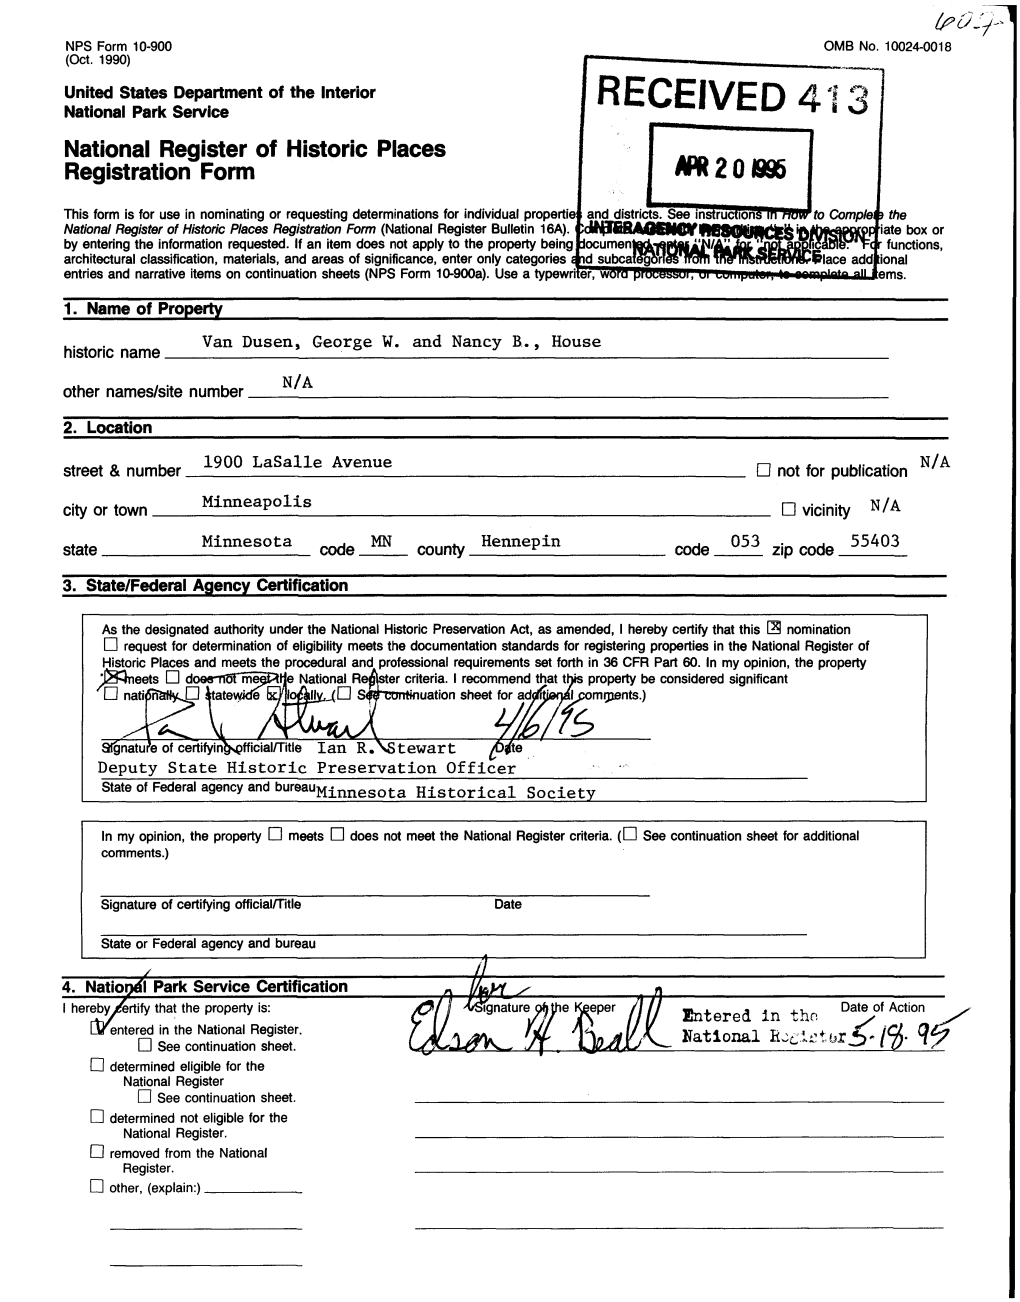 RECEIVED 4 National Register of Historic Places Registration Form APR20H96